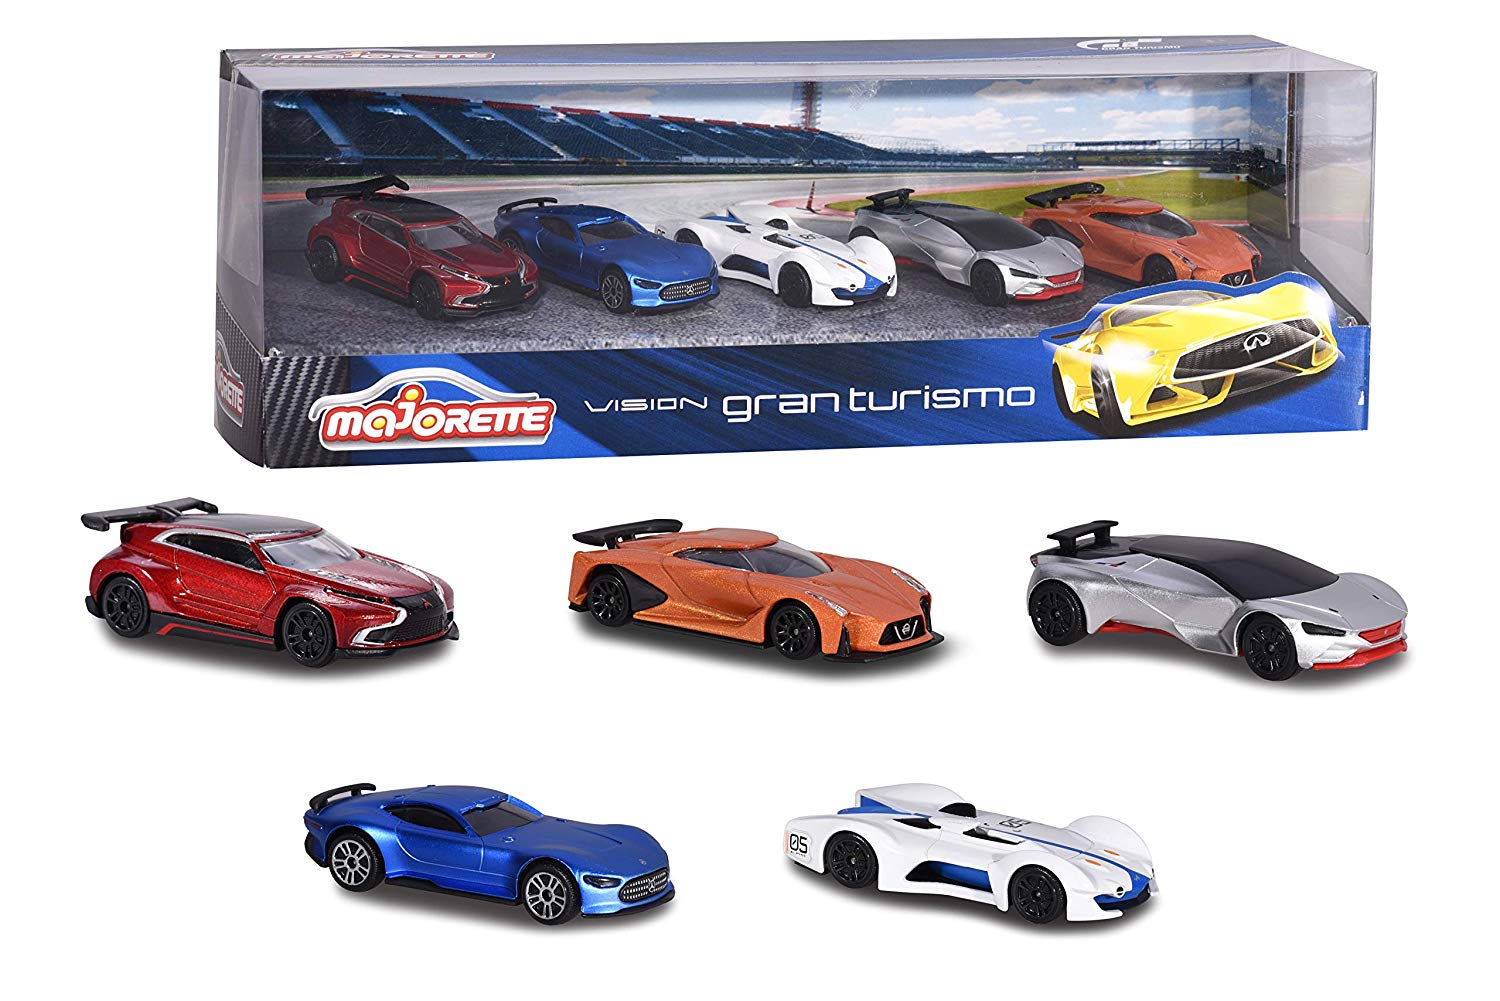 Majorette 212054052 Vision Gran Turismo, Miniature Vehicle Gift Pack (5 Pie